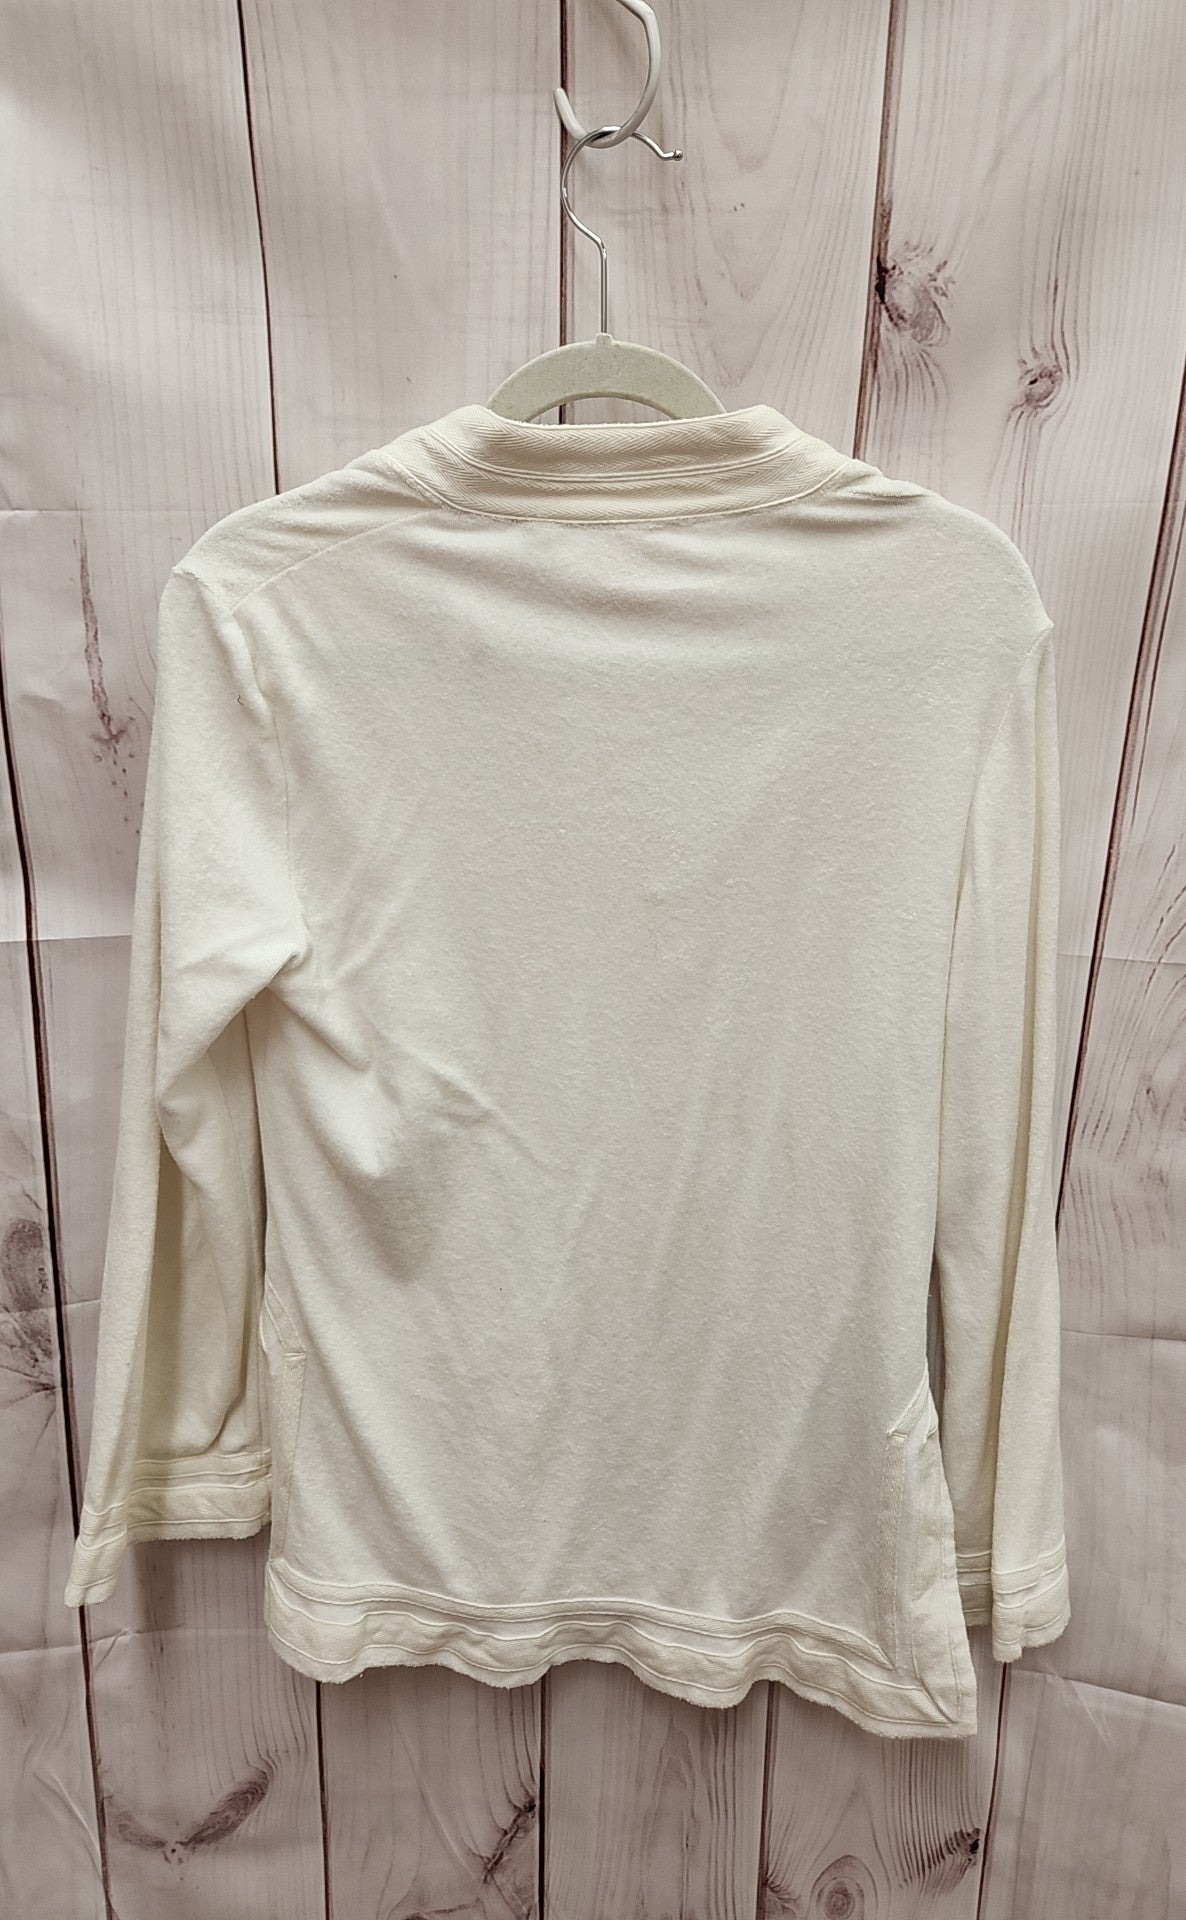 Tory Burch Women's Size S White Cotton Sweatshirt